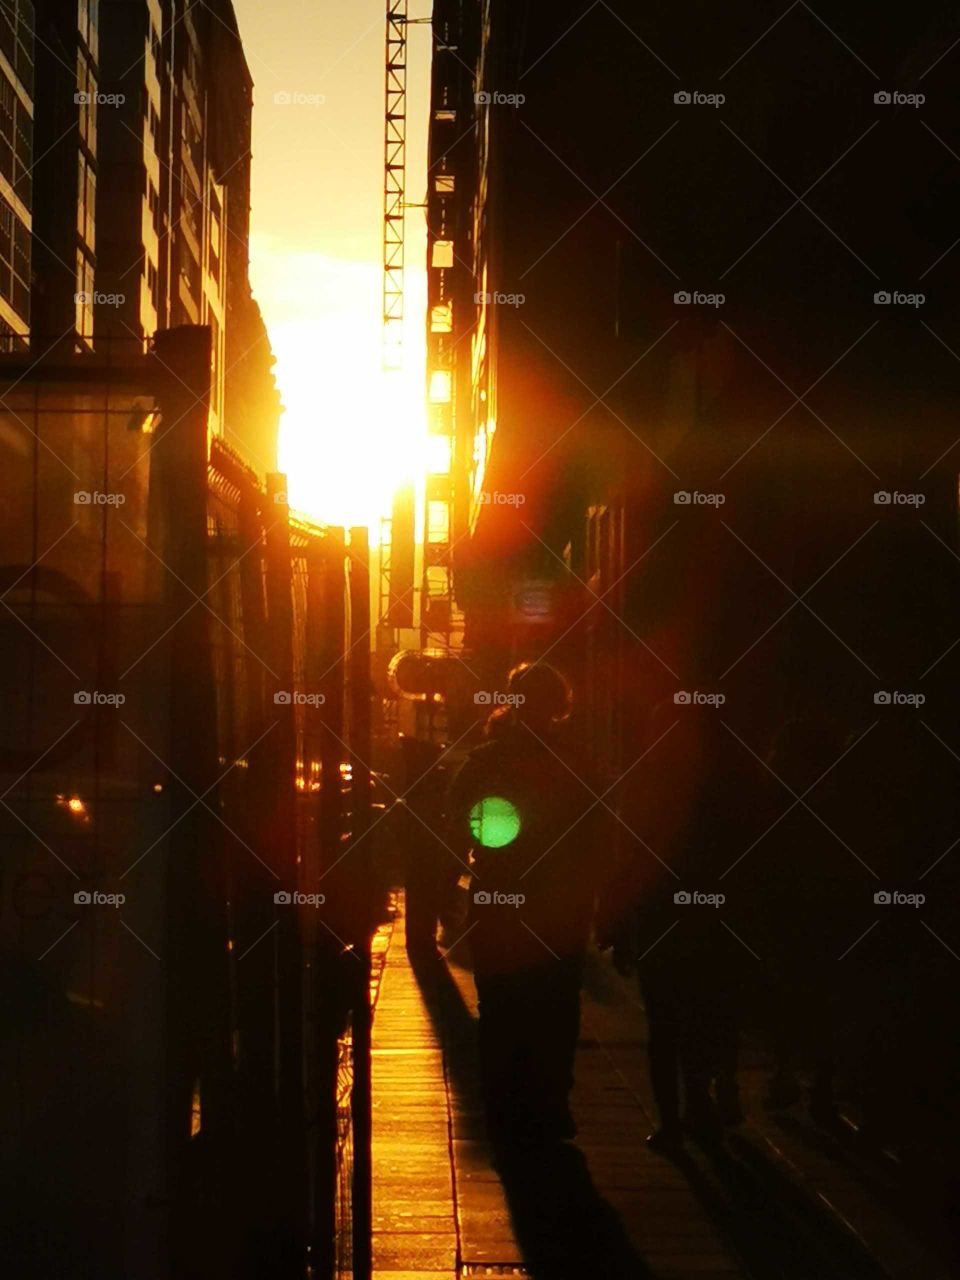 The sun in the street